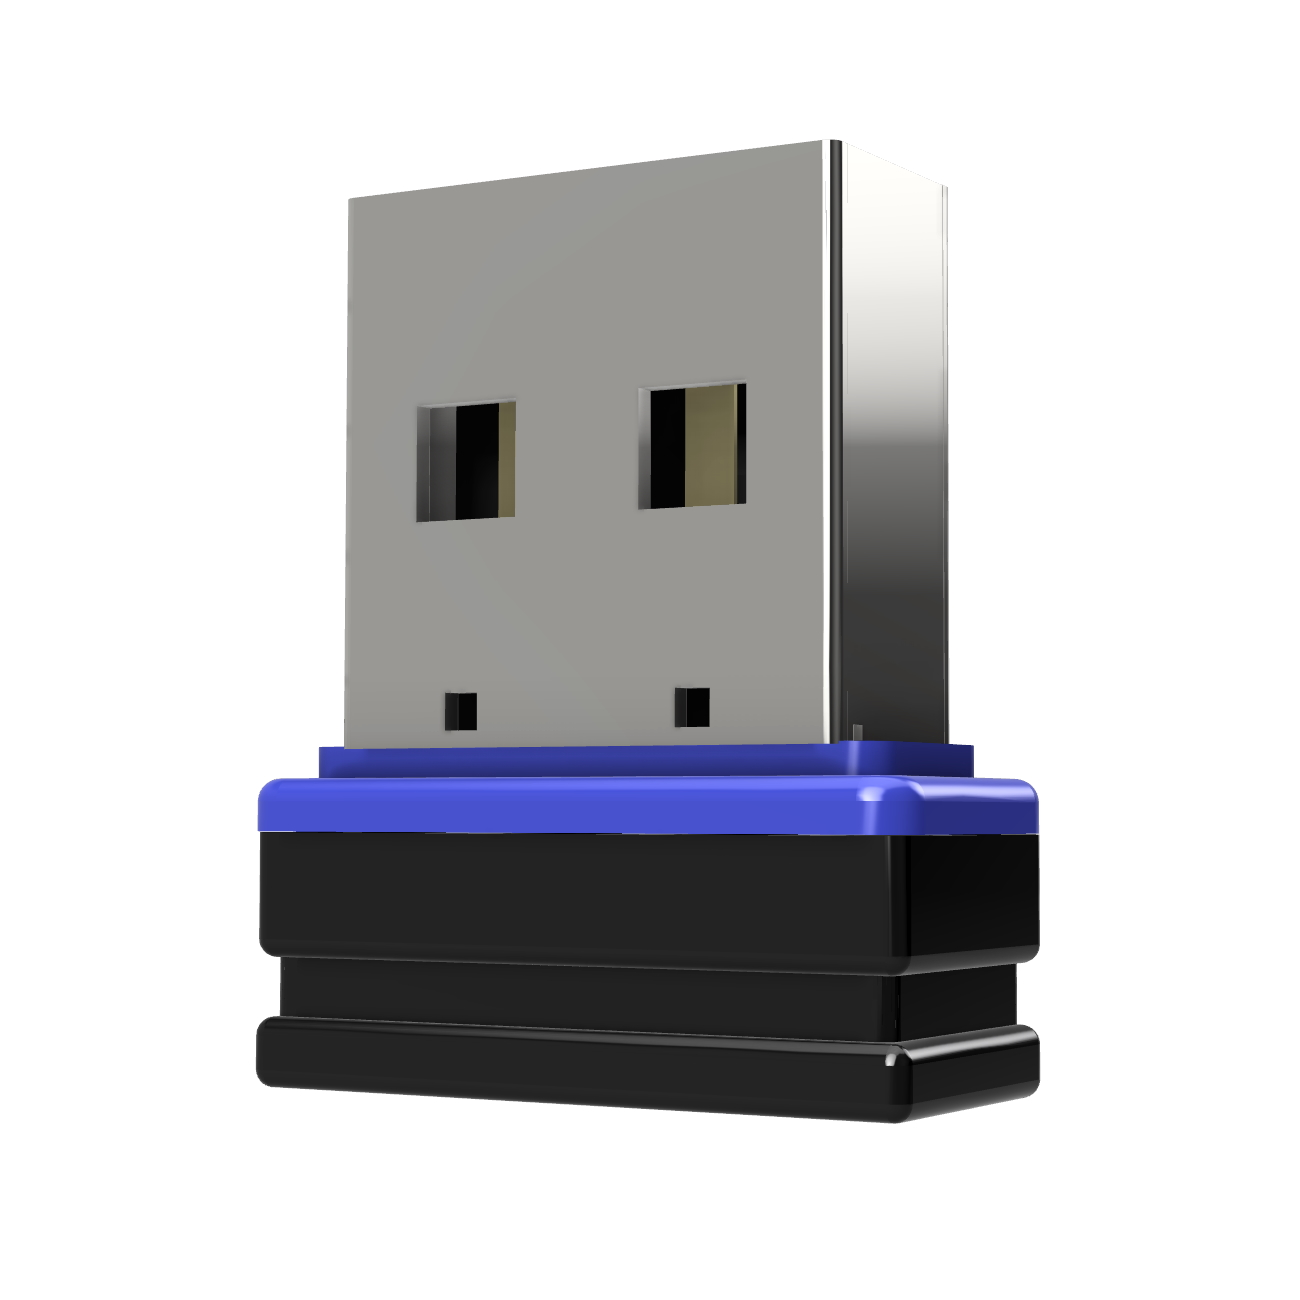 GB) P1 USB-Stick ®ULTRA 32 GERMANY Mini USB (Schwarz/Blau,